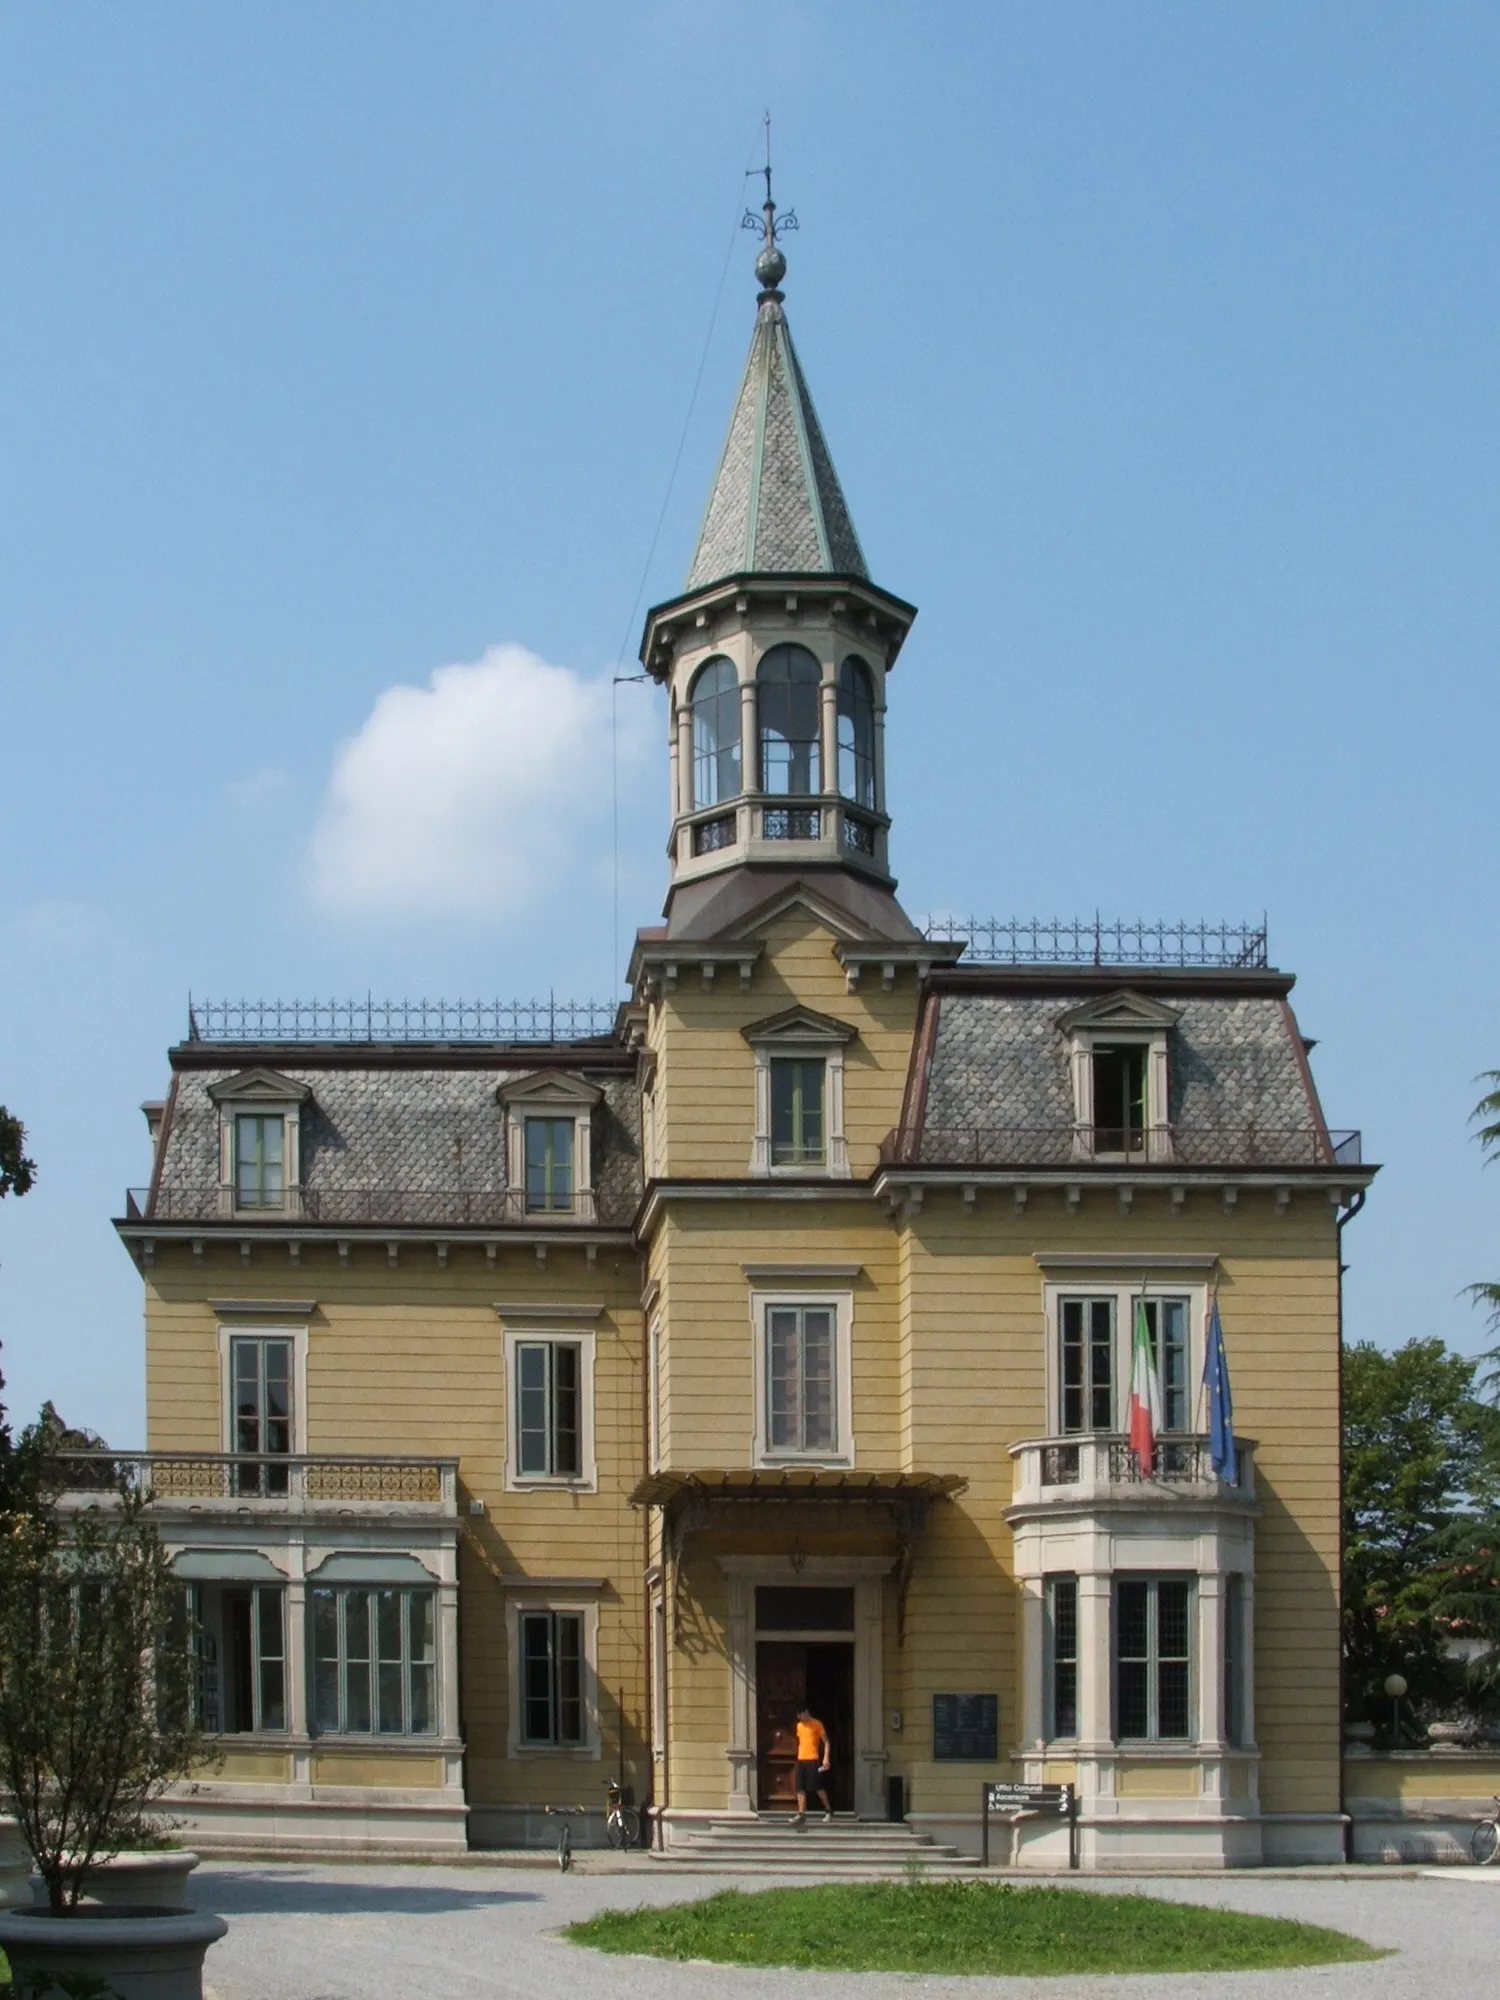 Photo showing: Zanica (BG) - Lombardy - Italy, town hall